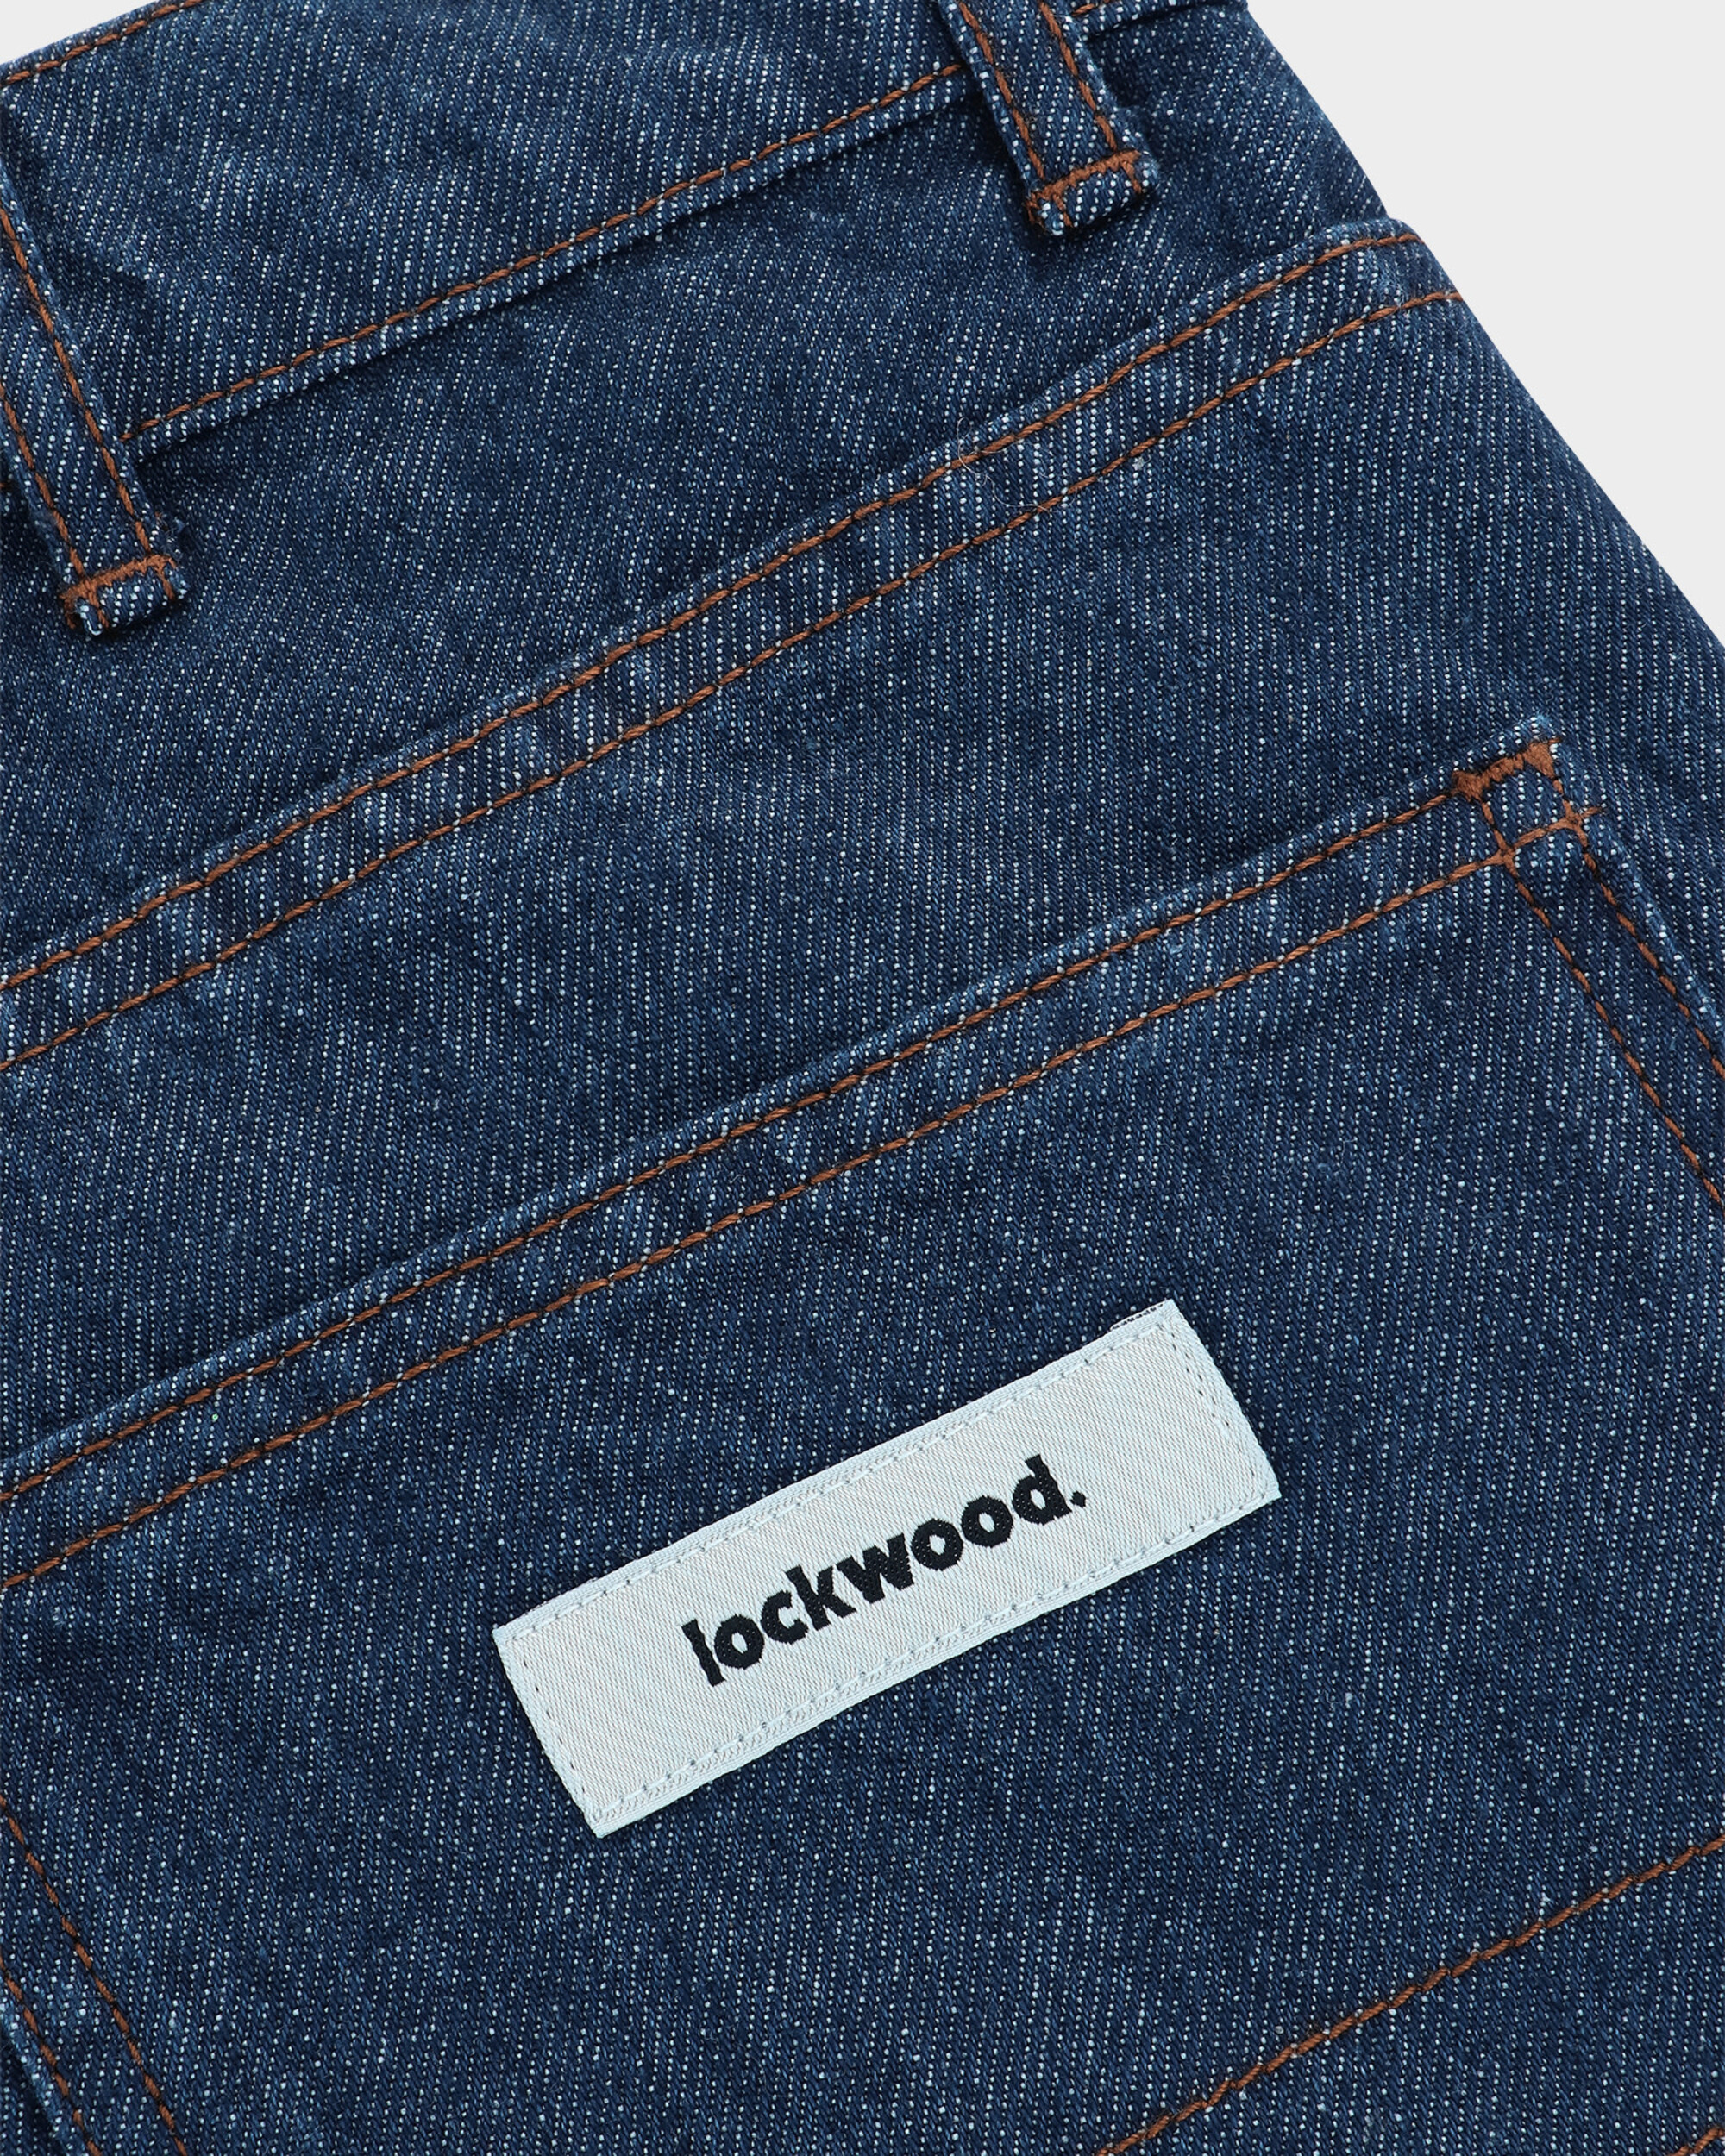 Lockwood Straight Baggy Jeans - Classic Denim